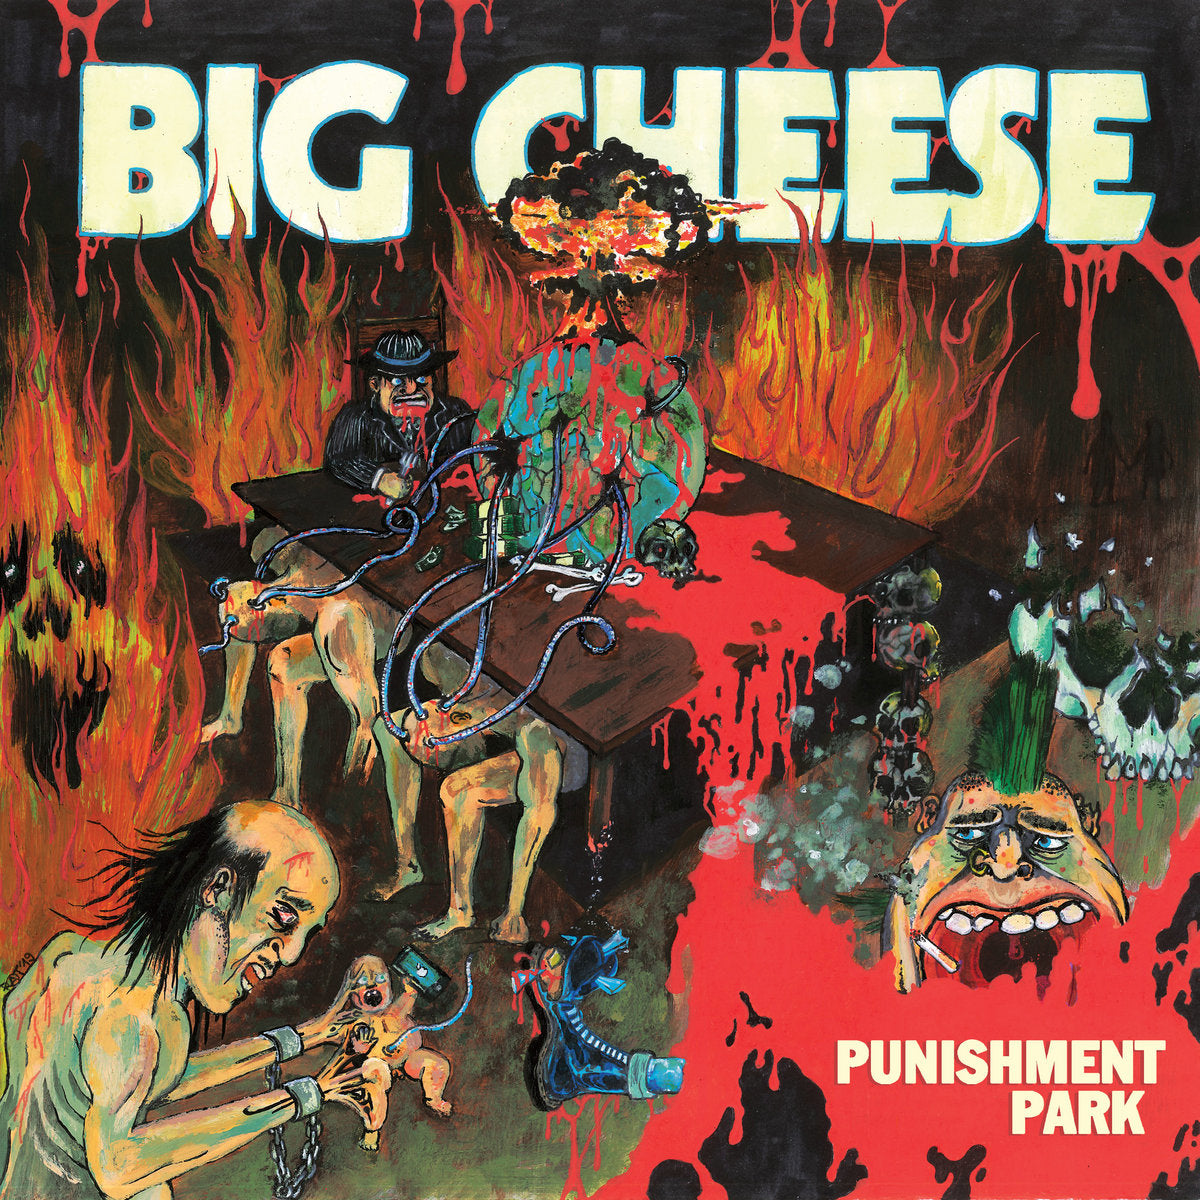 BIG CHEESE "Punishment Park" LP